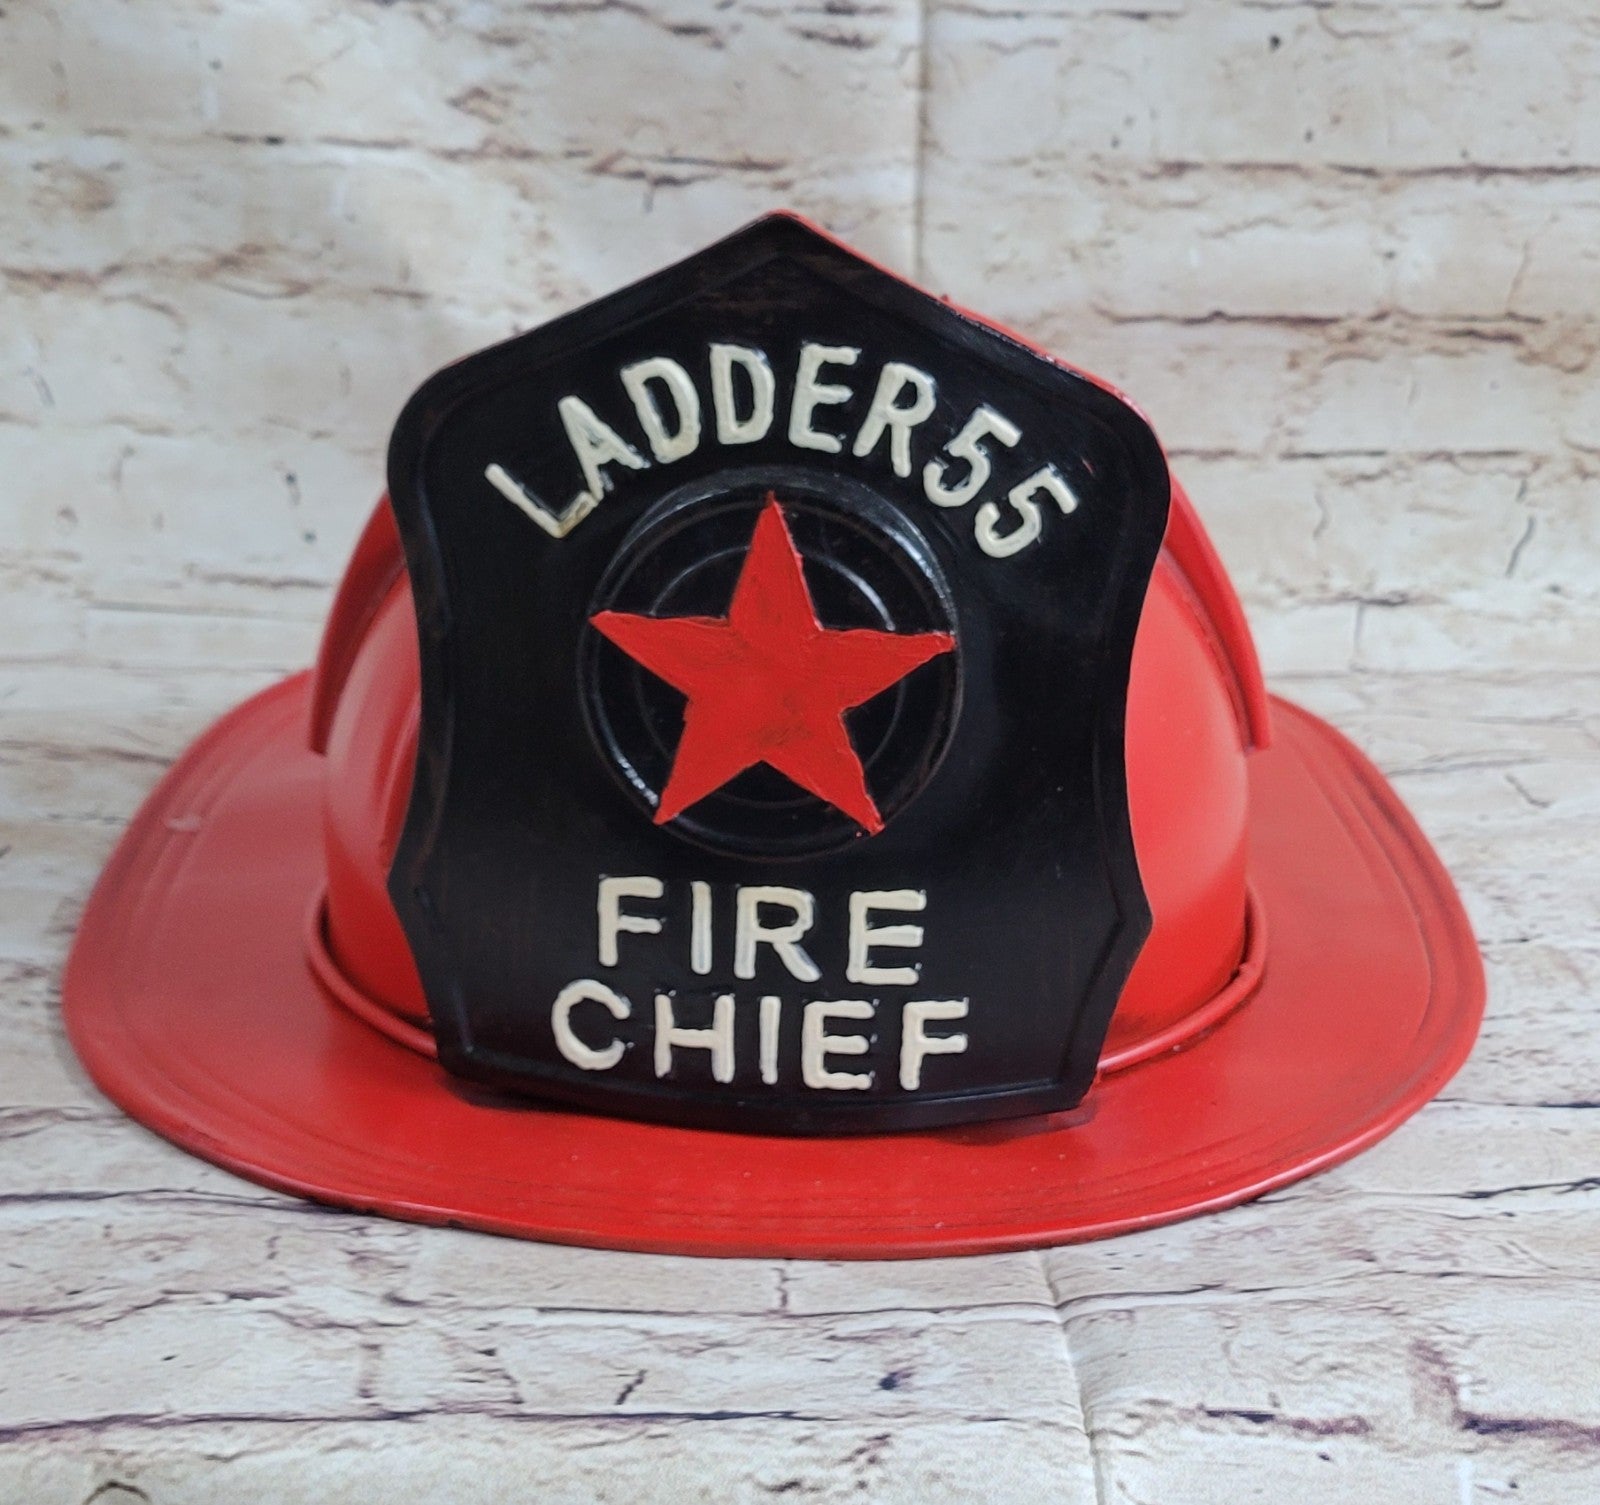 Ladder 55 Vintage Tin Metal Fire Chief Firefighter Hat Figurine Gift